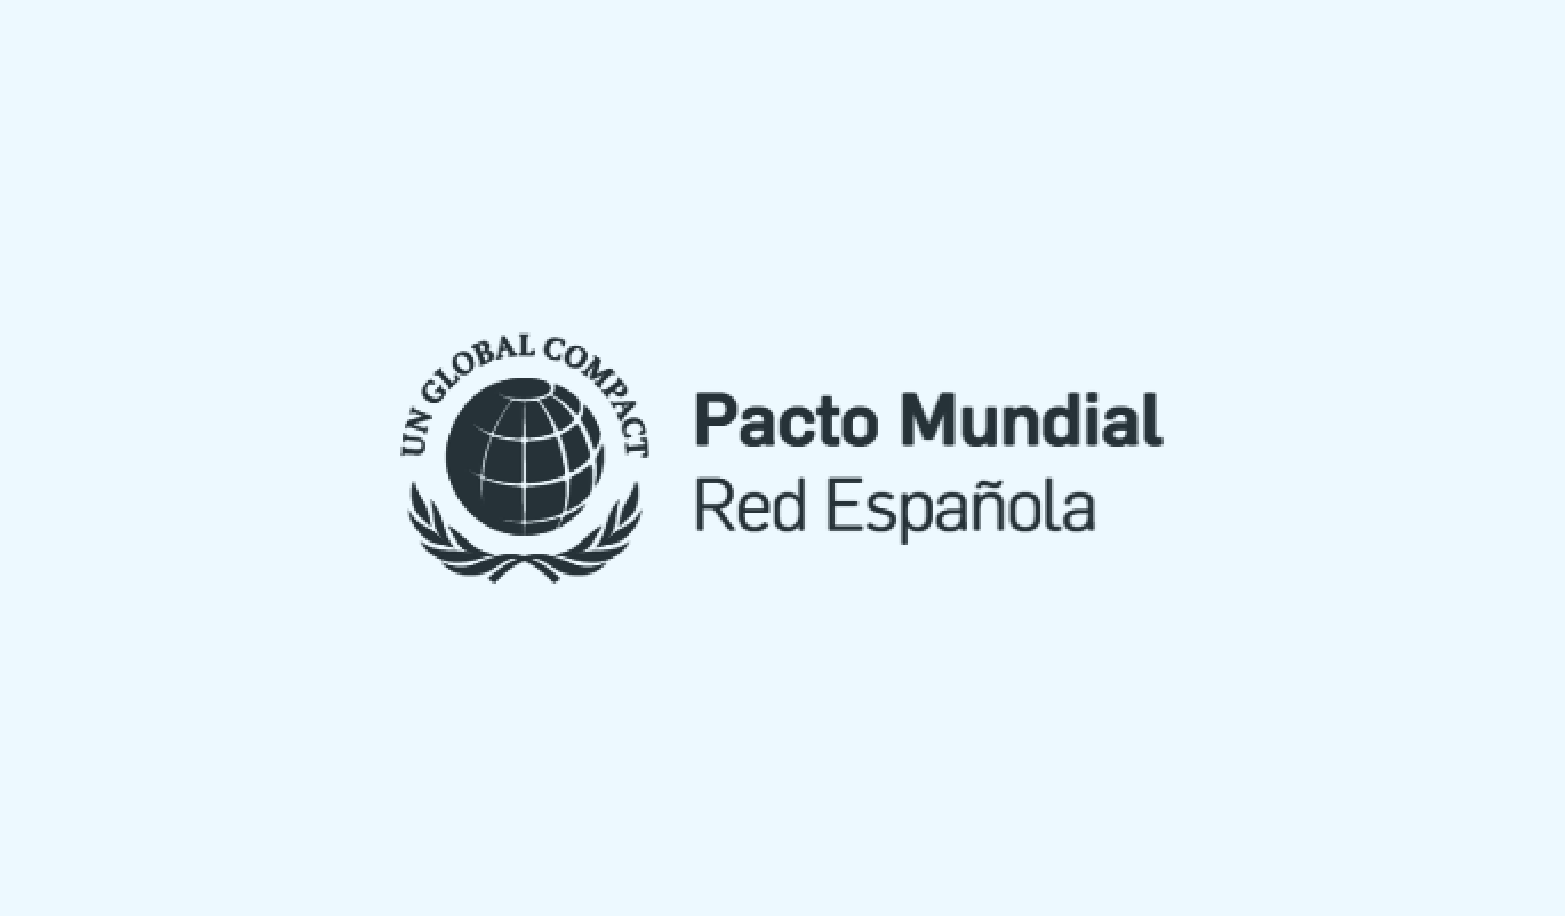 Logo Pacto Mundial Red Española